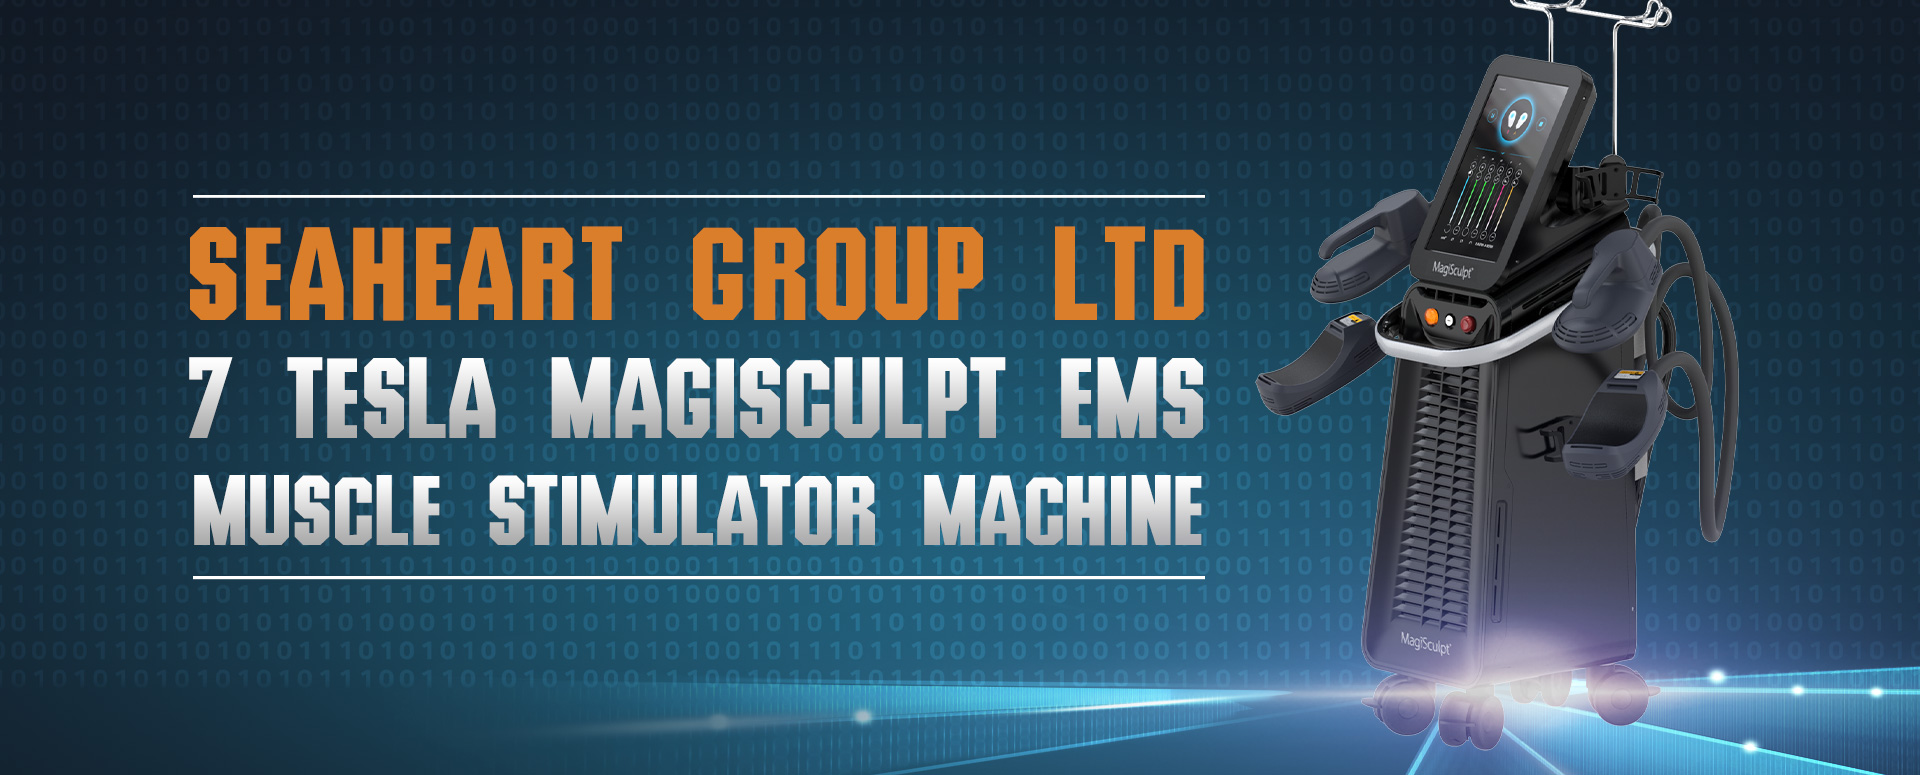 MagiSculpt ems body sculpting machine SM-20